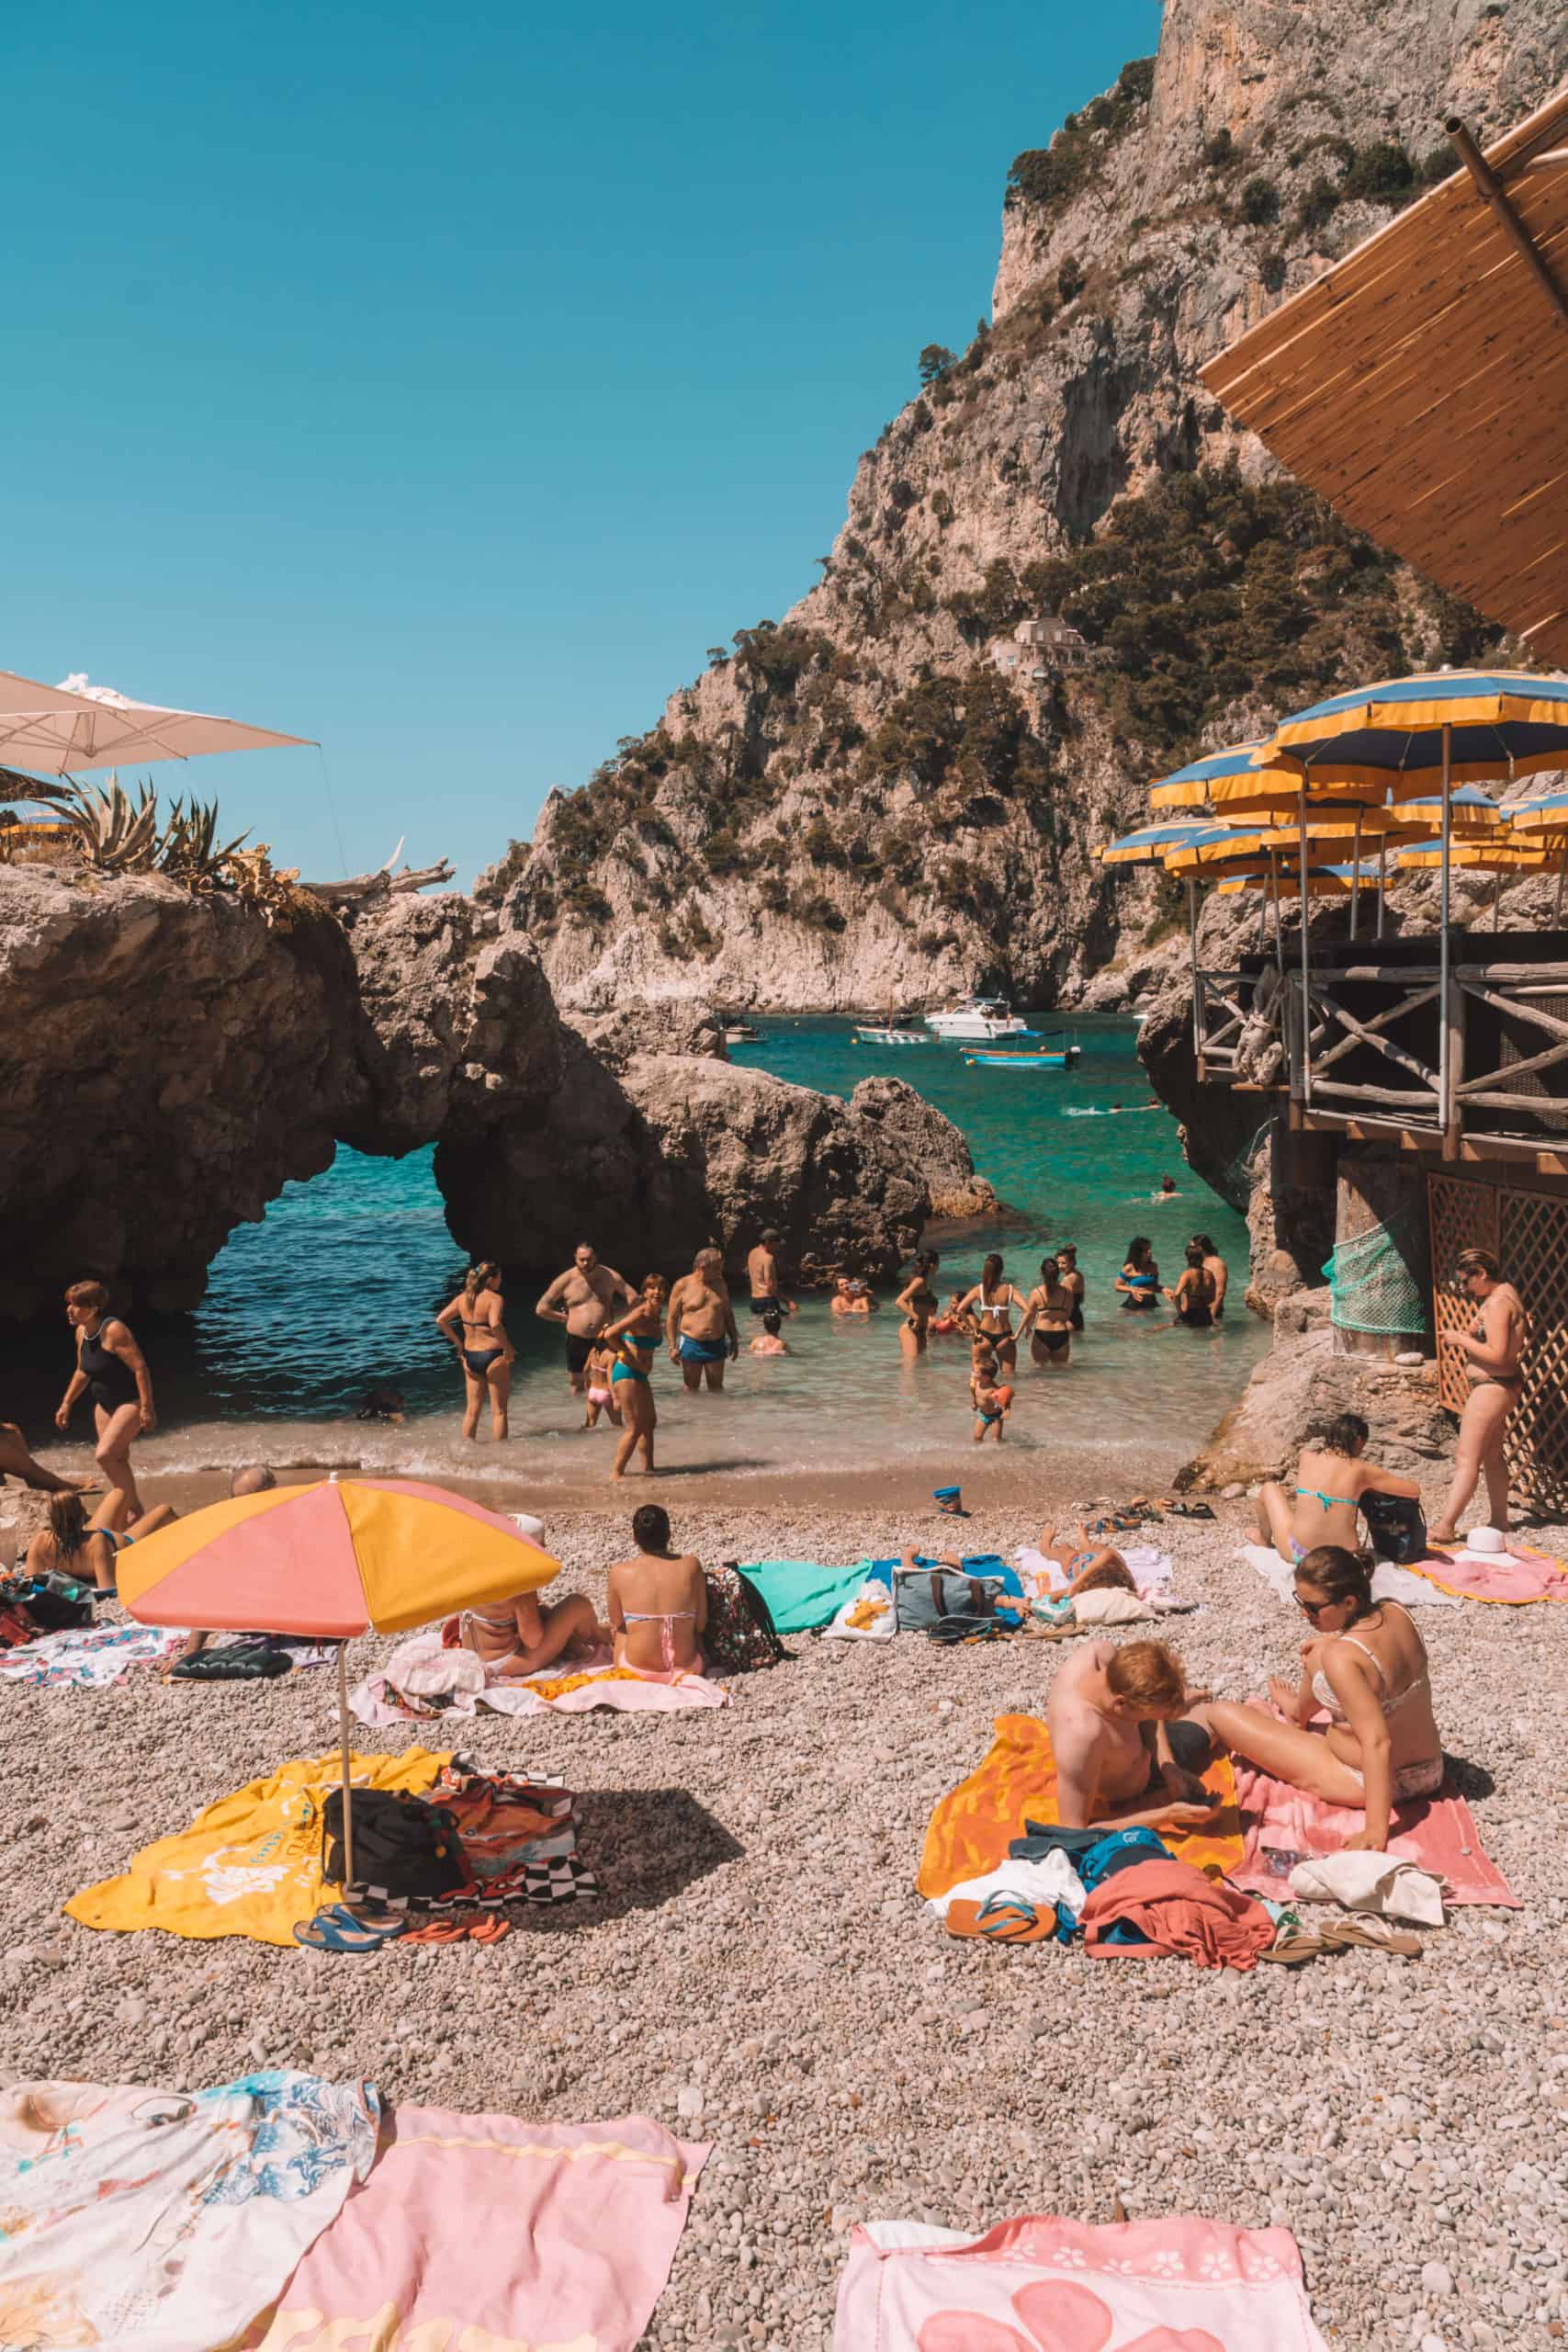 Packed beach in Capri, Italy